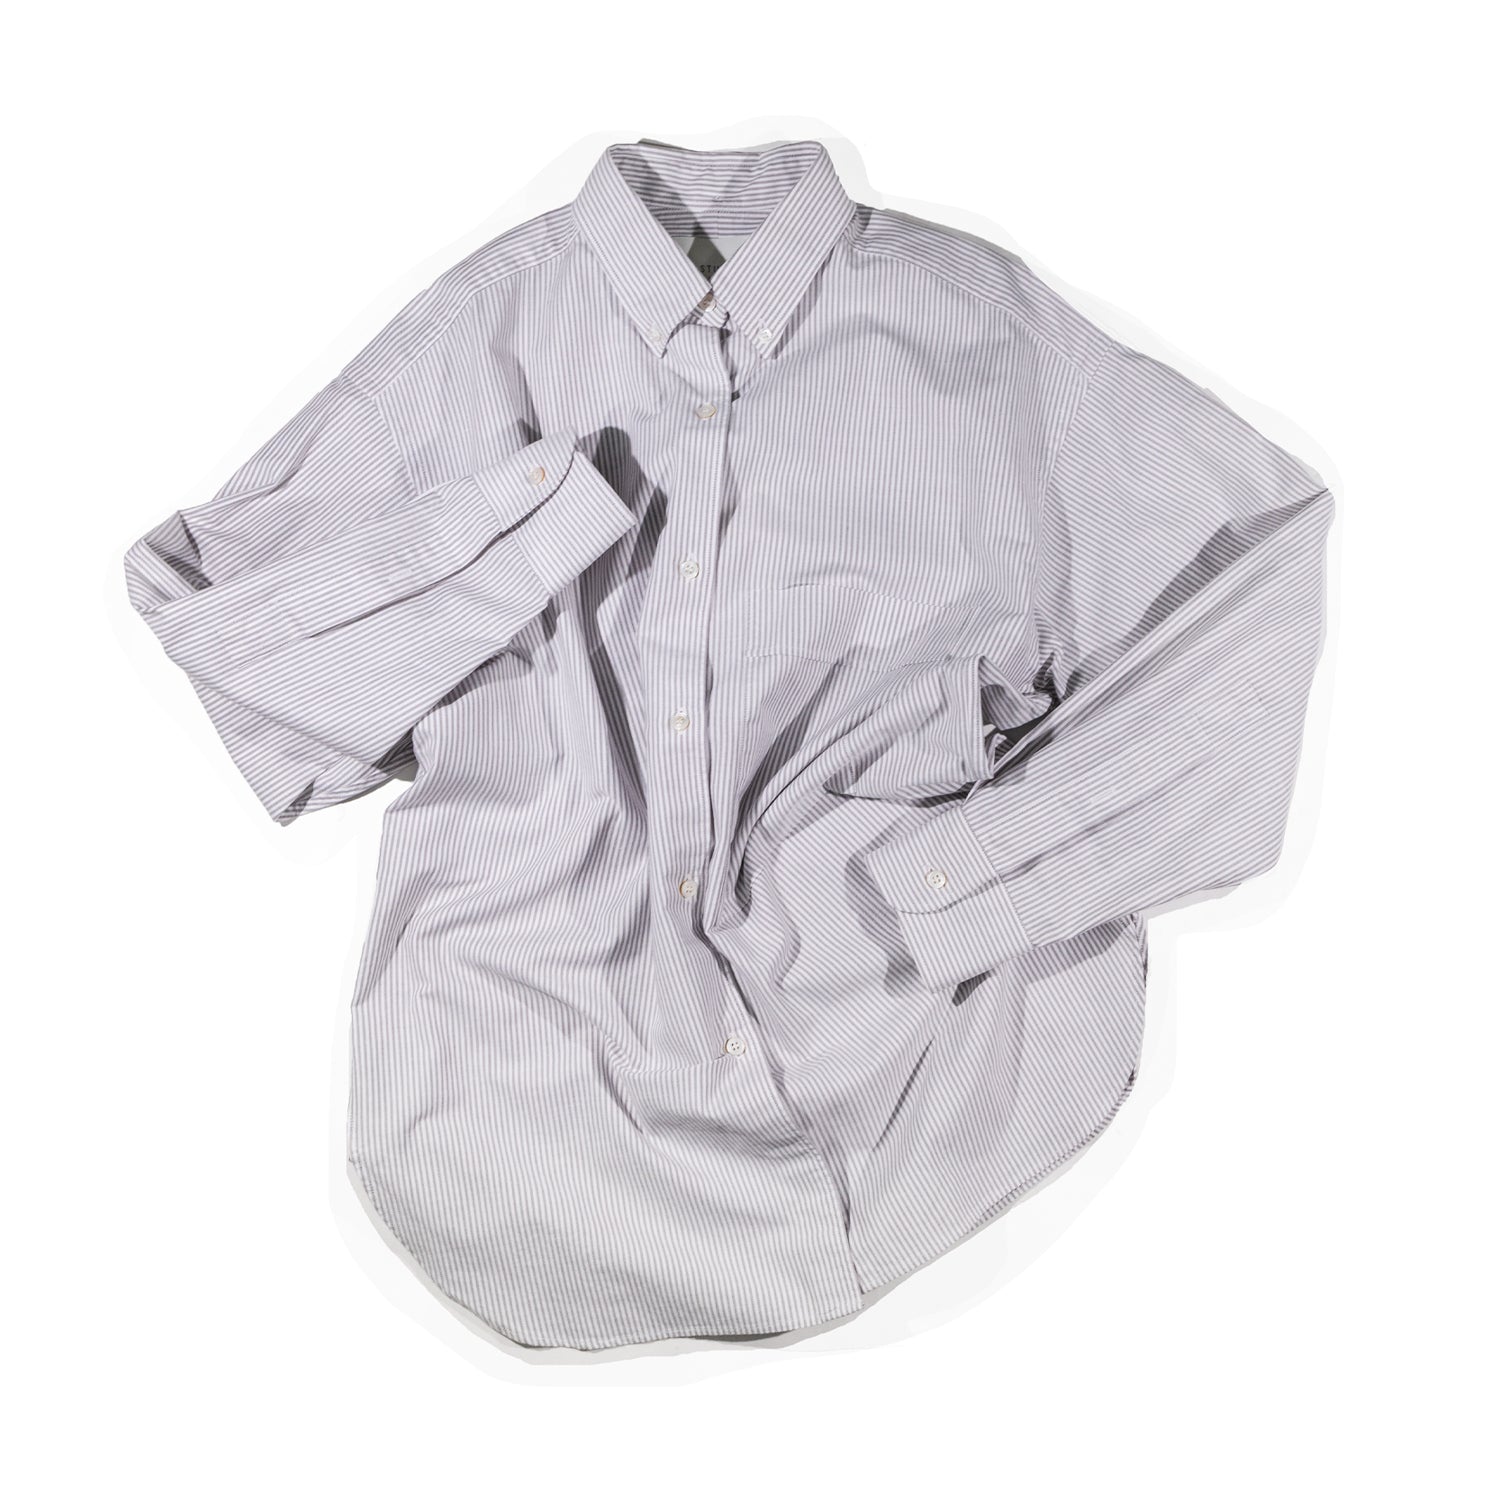 Studio Nicholson Creed Oversized Shirt in Grey Stripe